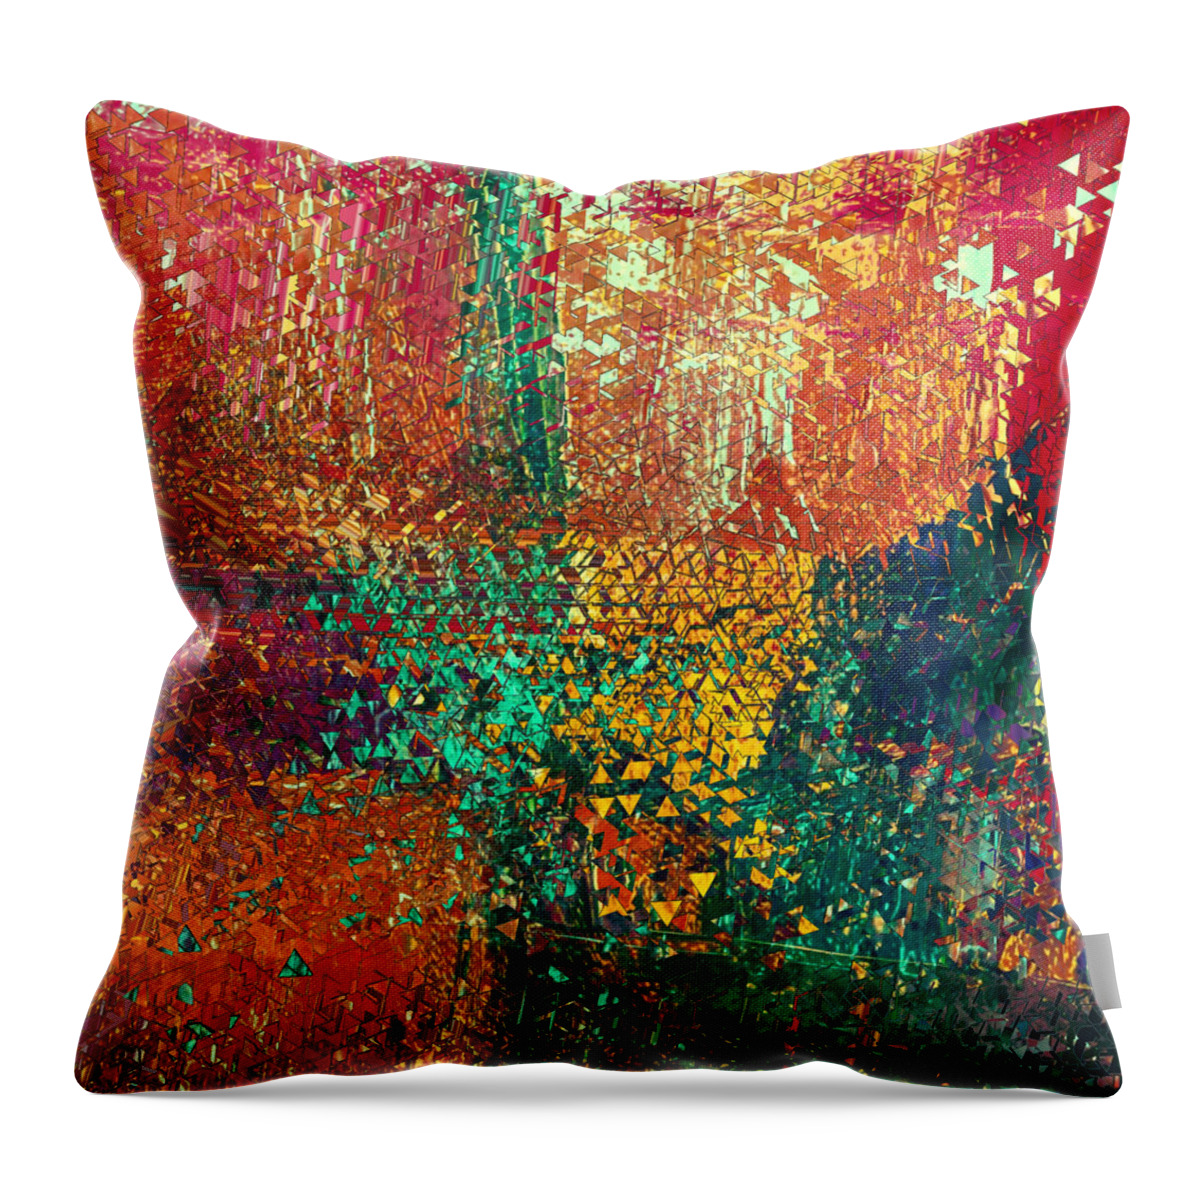 Abstract Art Throw Pillow featuring the digital art Fallen by Canessa Thomas